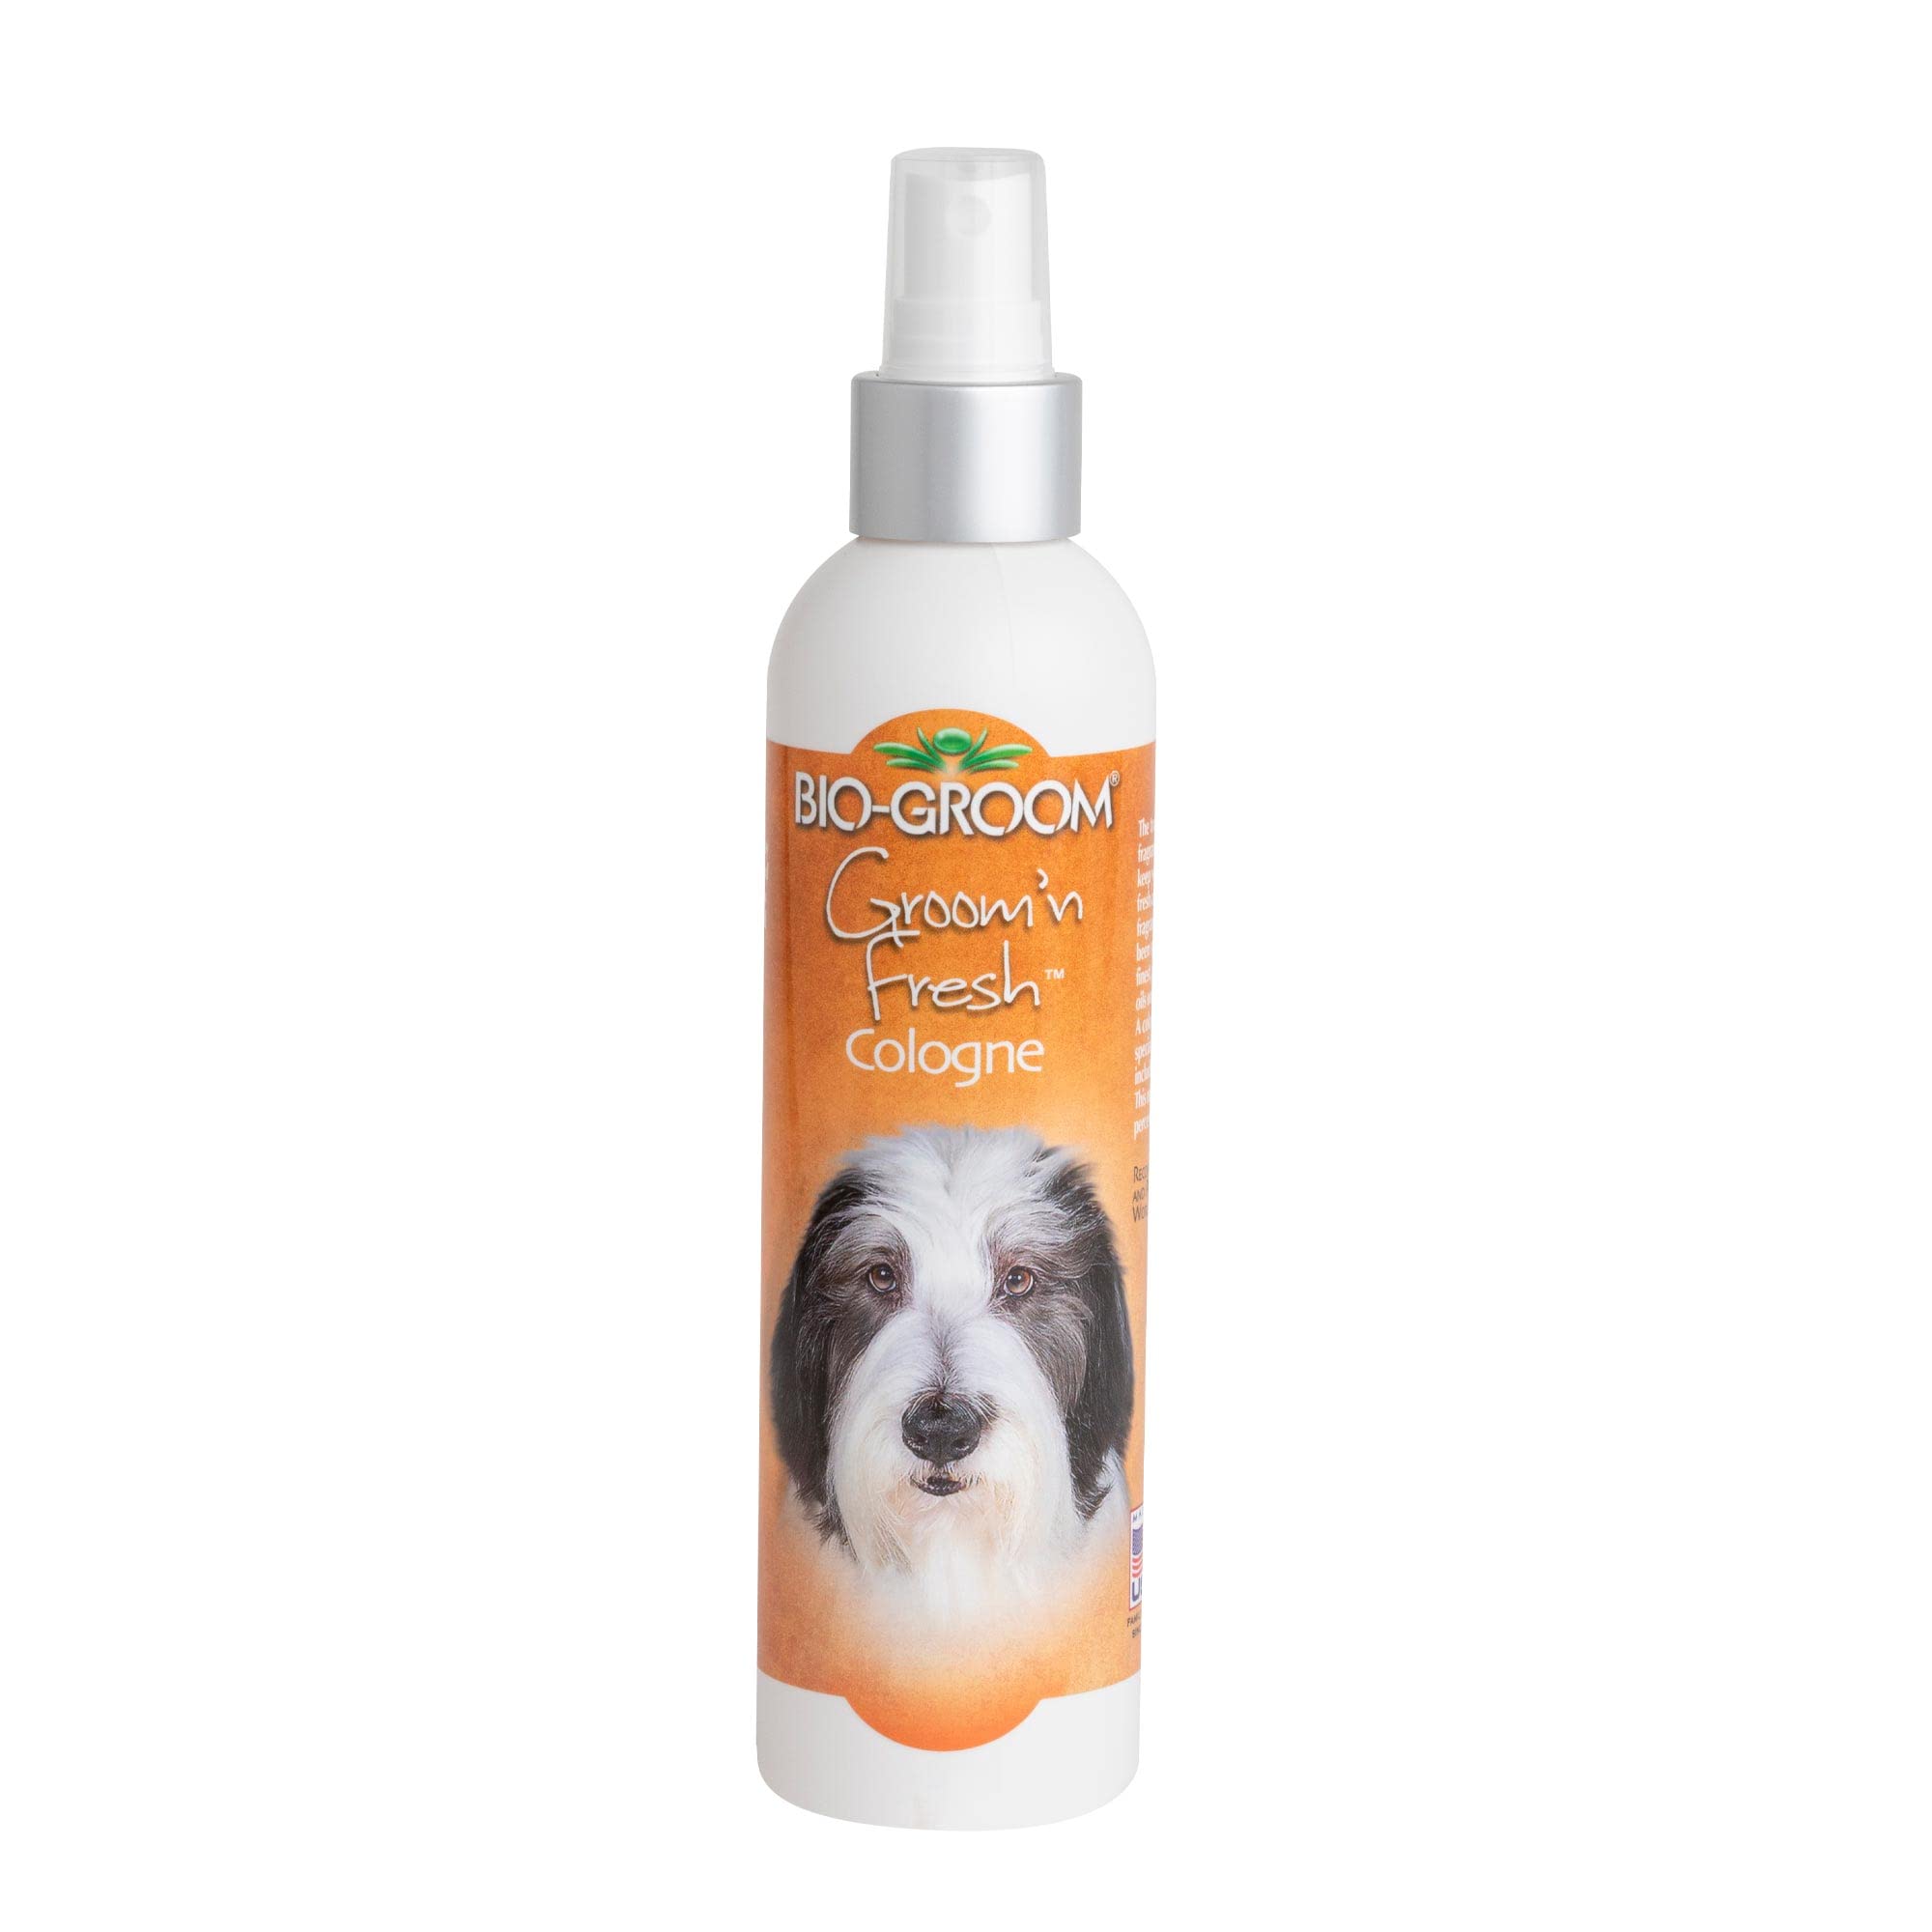 Bio-Groom Groom ‘N Fresh Cologne Dog Spray